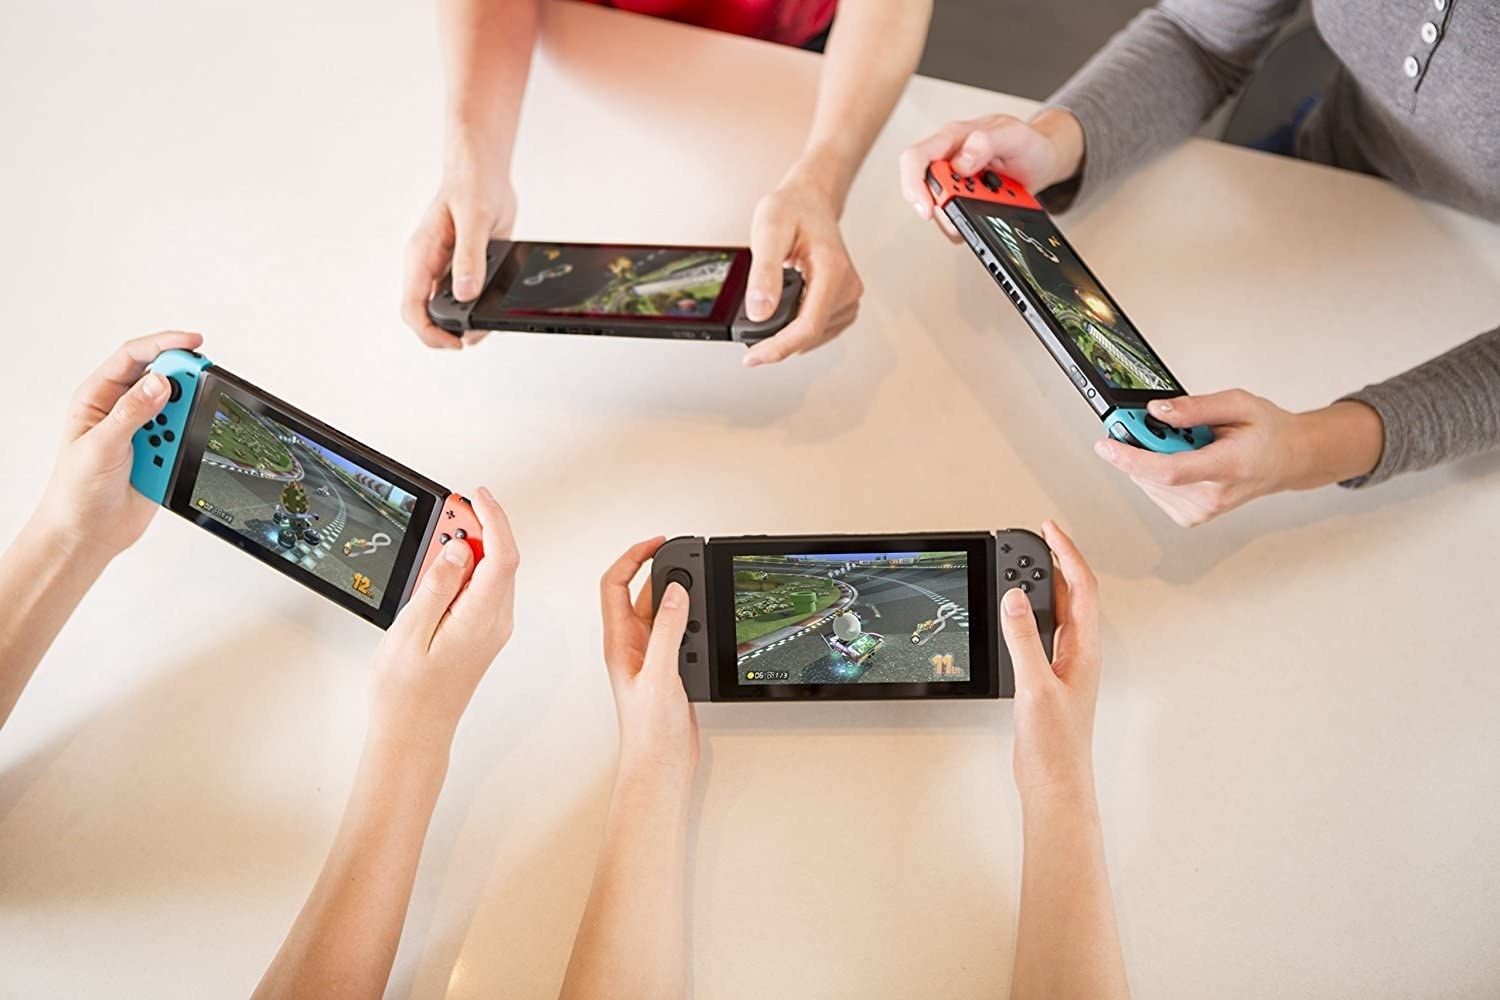 Four kids playing Mario Kart on Nintendo Switch consoles